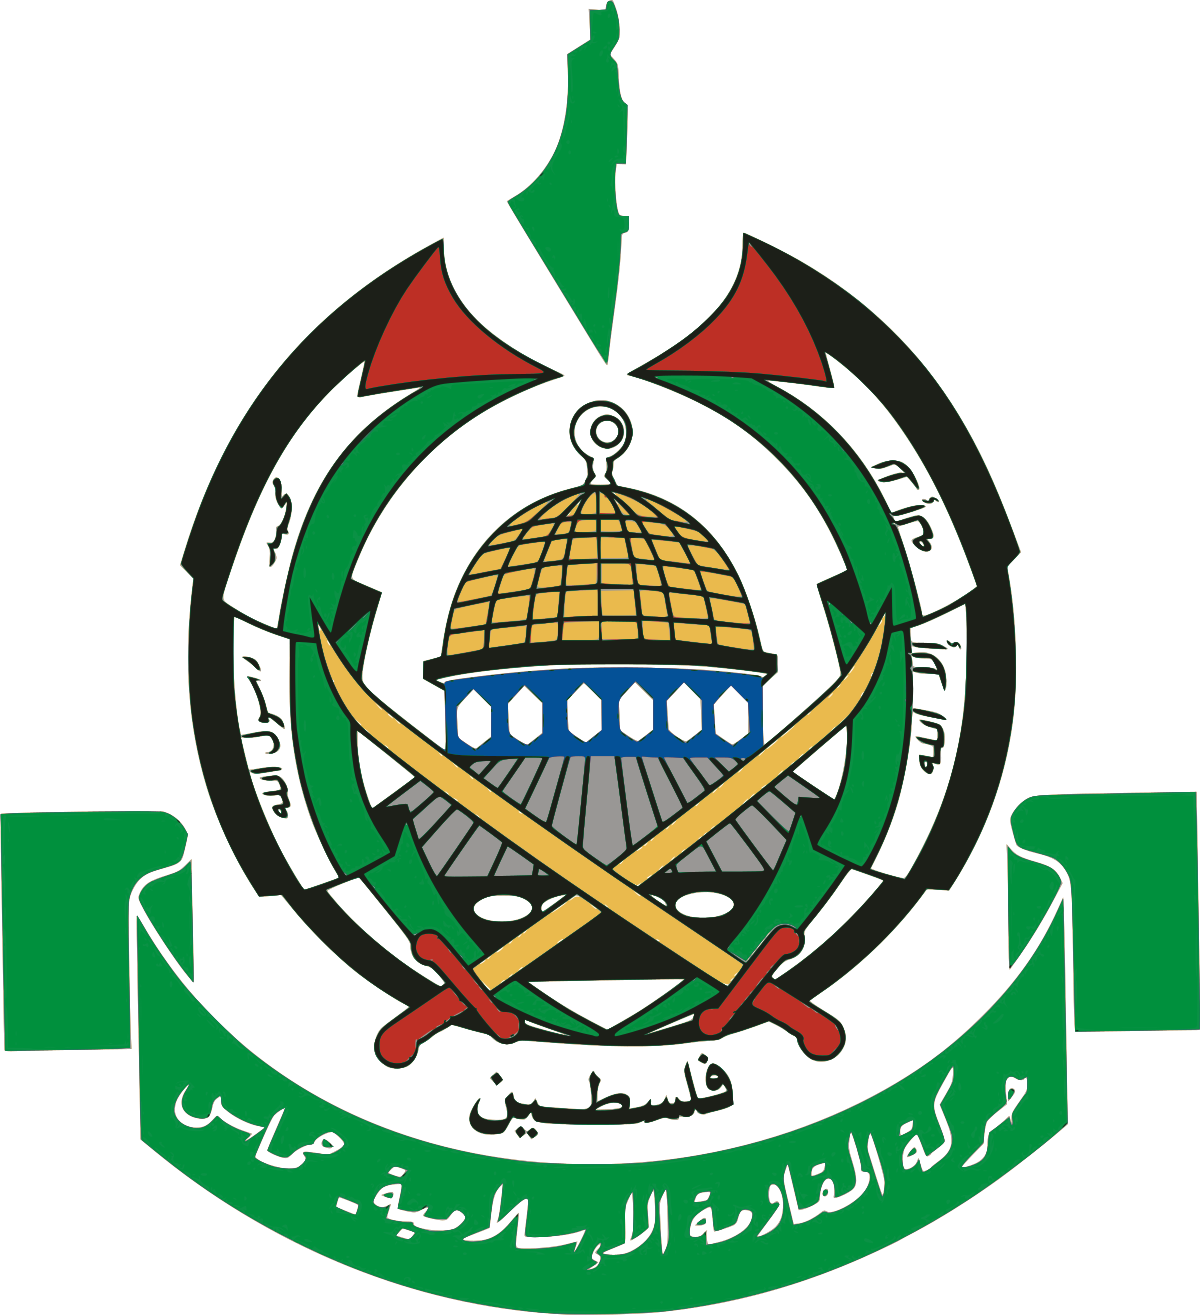 Hamas - Wikipedia